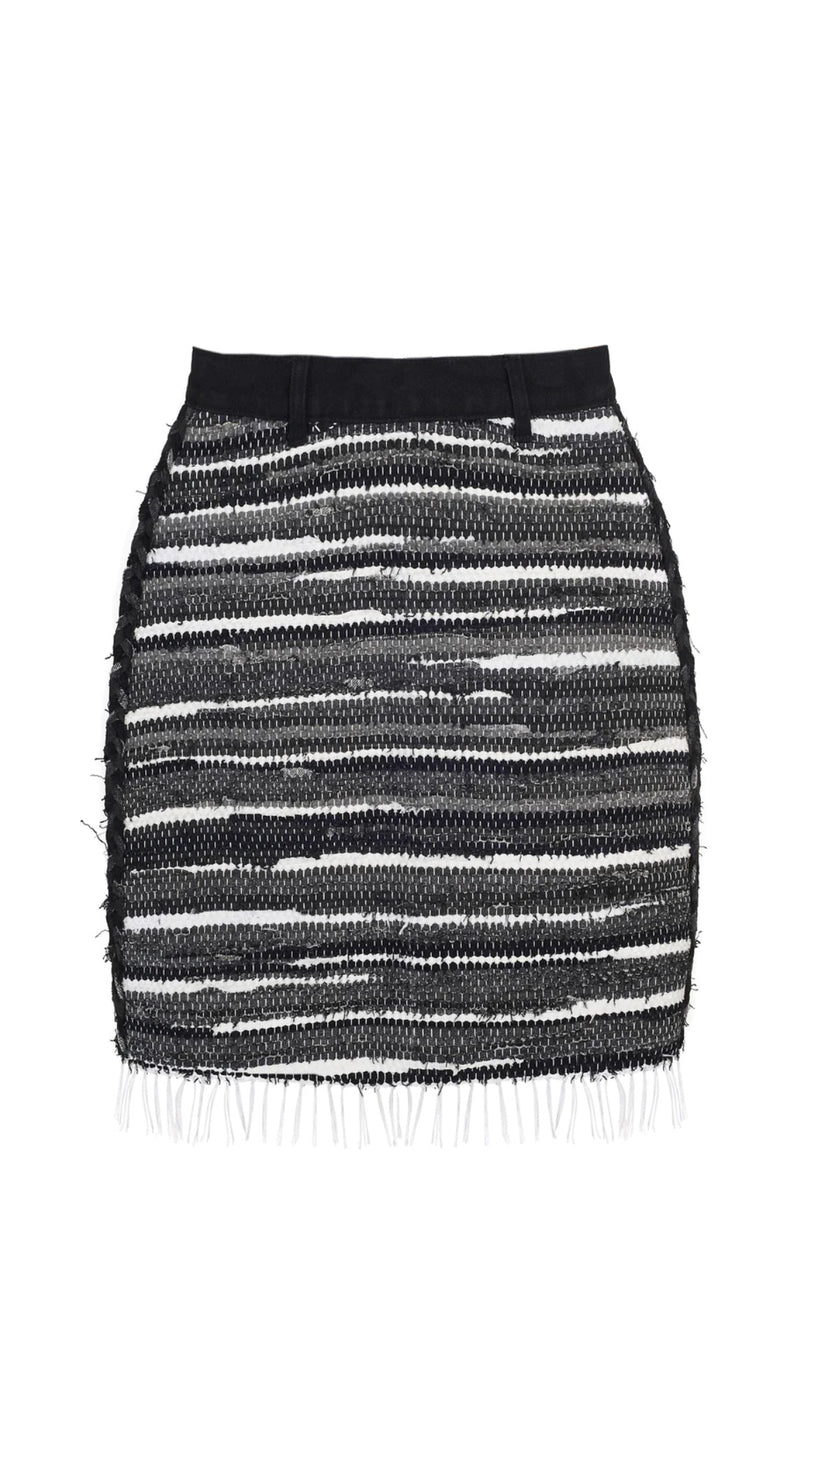 Zero-Waste Skirt in Rug Technique image